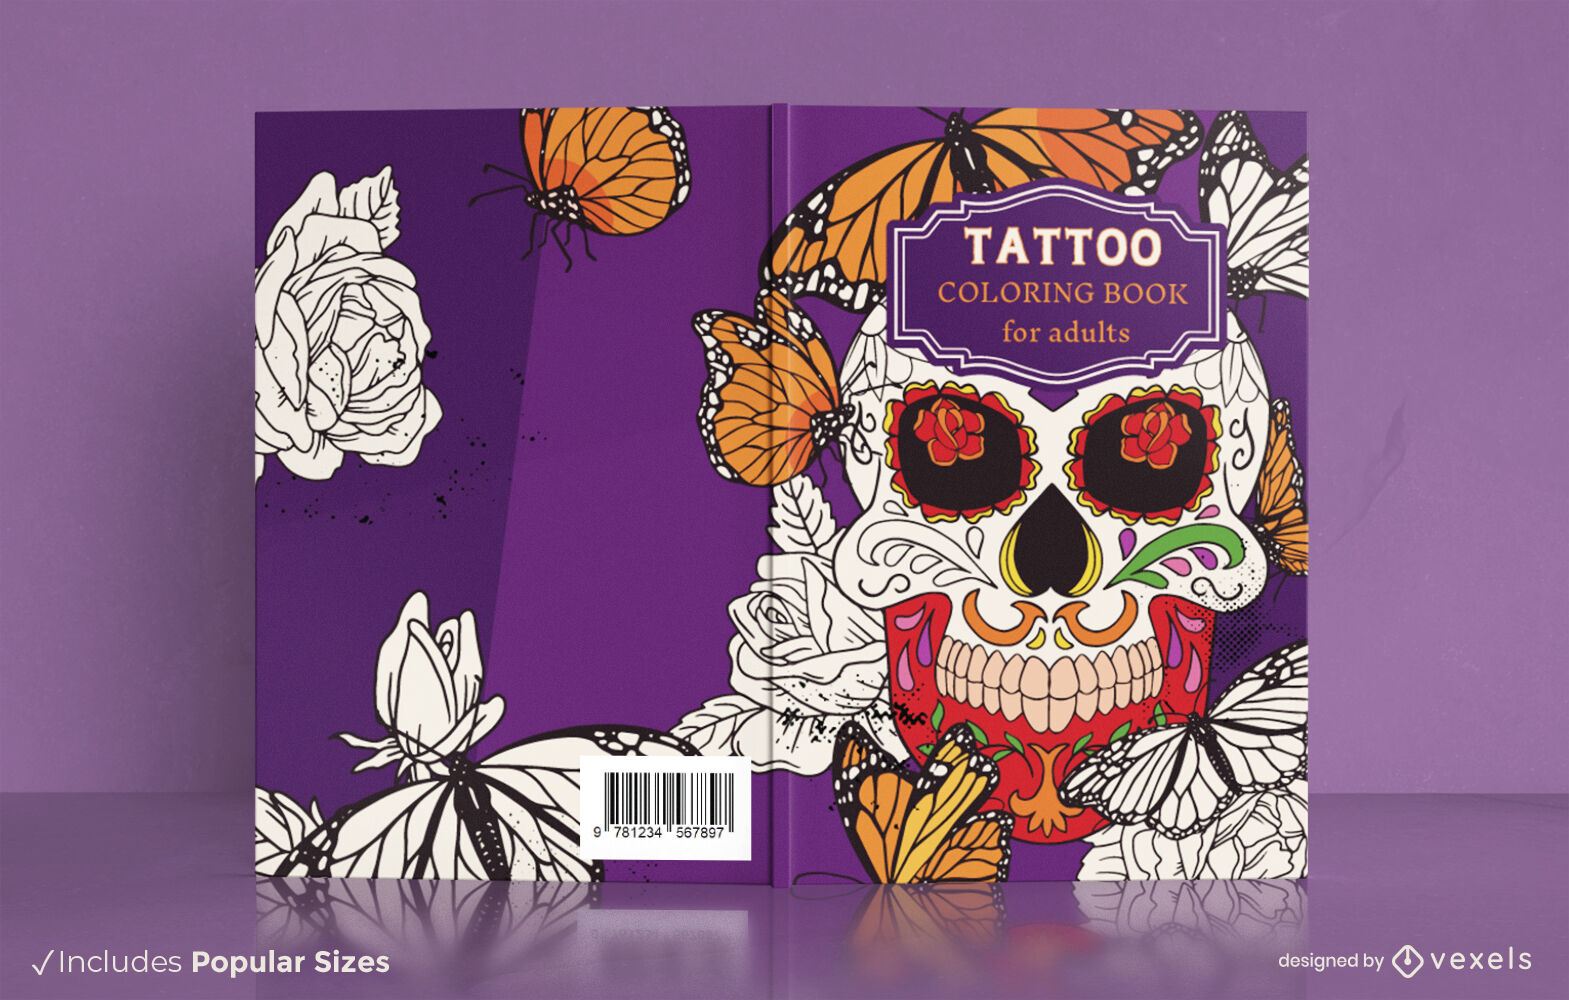 Tattoo coloring book cover design KDP